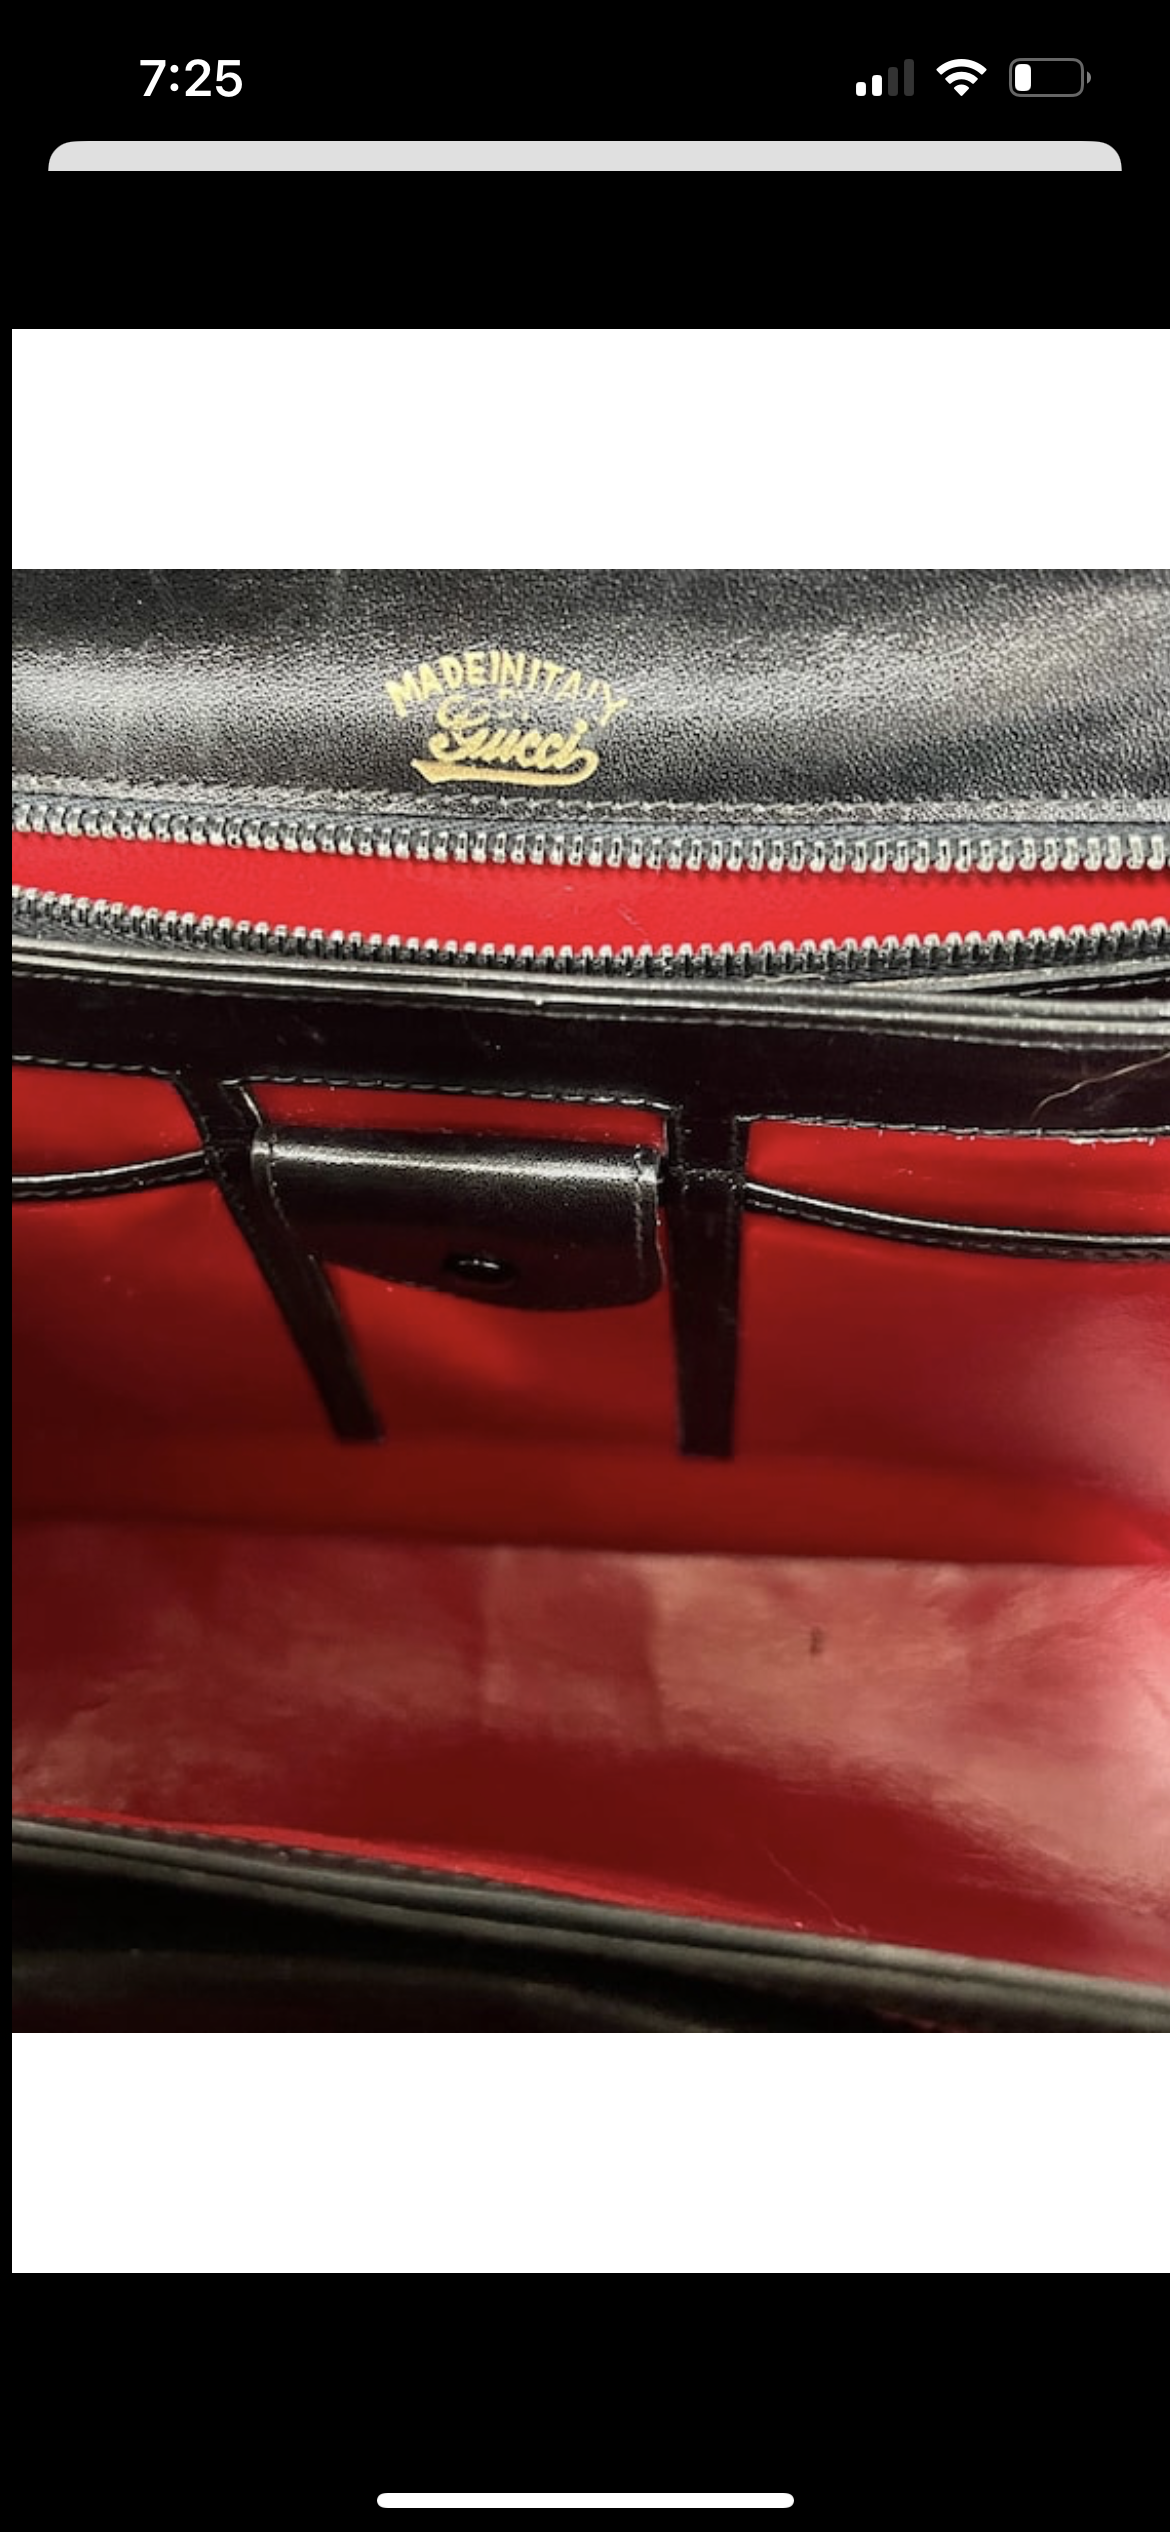 Rare & Original 1970s Gucci Bucket Canvas Logo & Leather Bag w